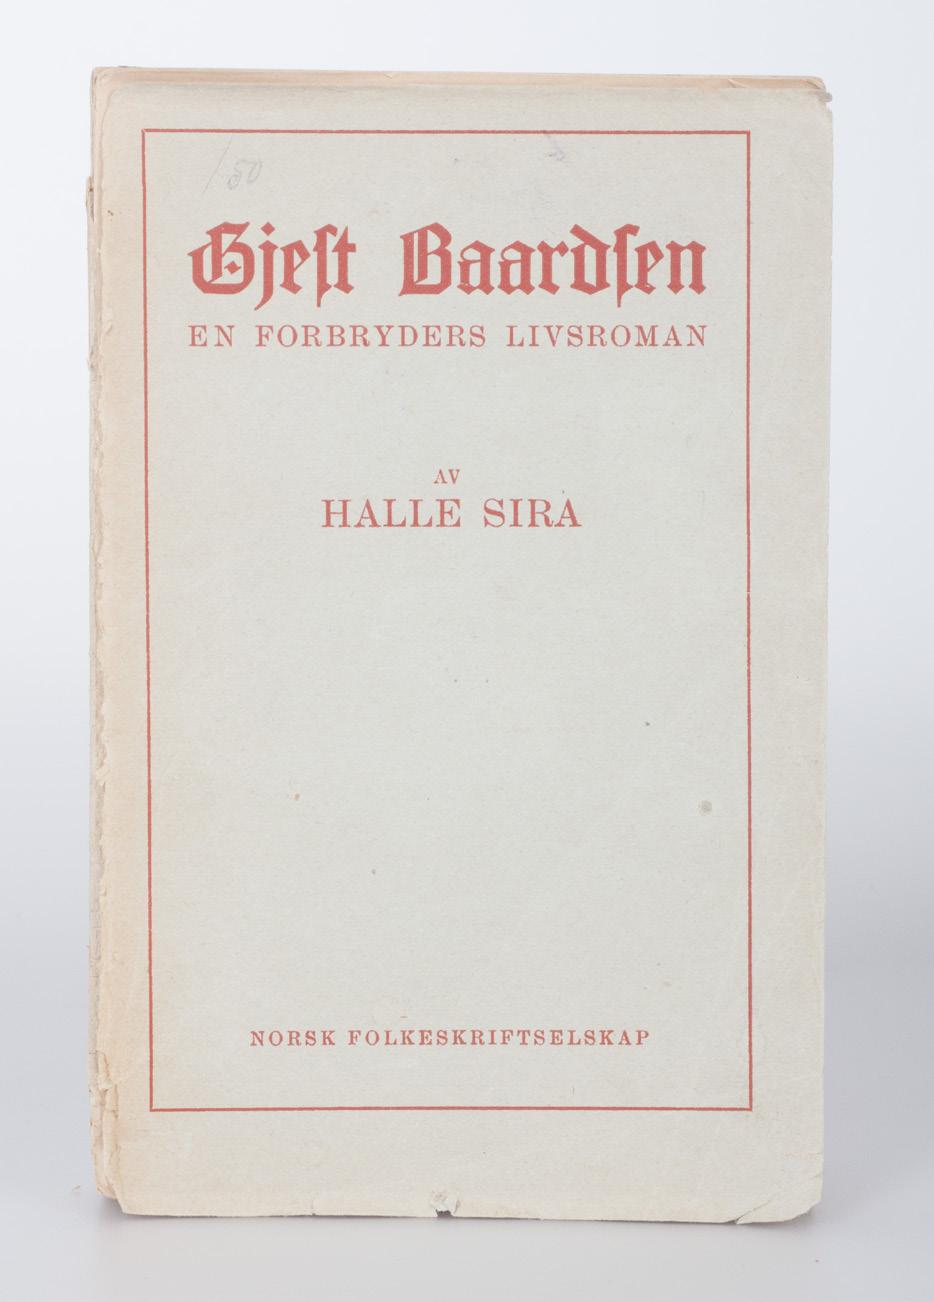 -4-2. [Holger Sinding] Halle Sira Gjest Baardsen.